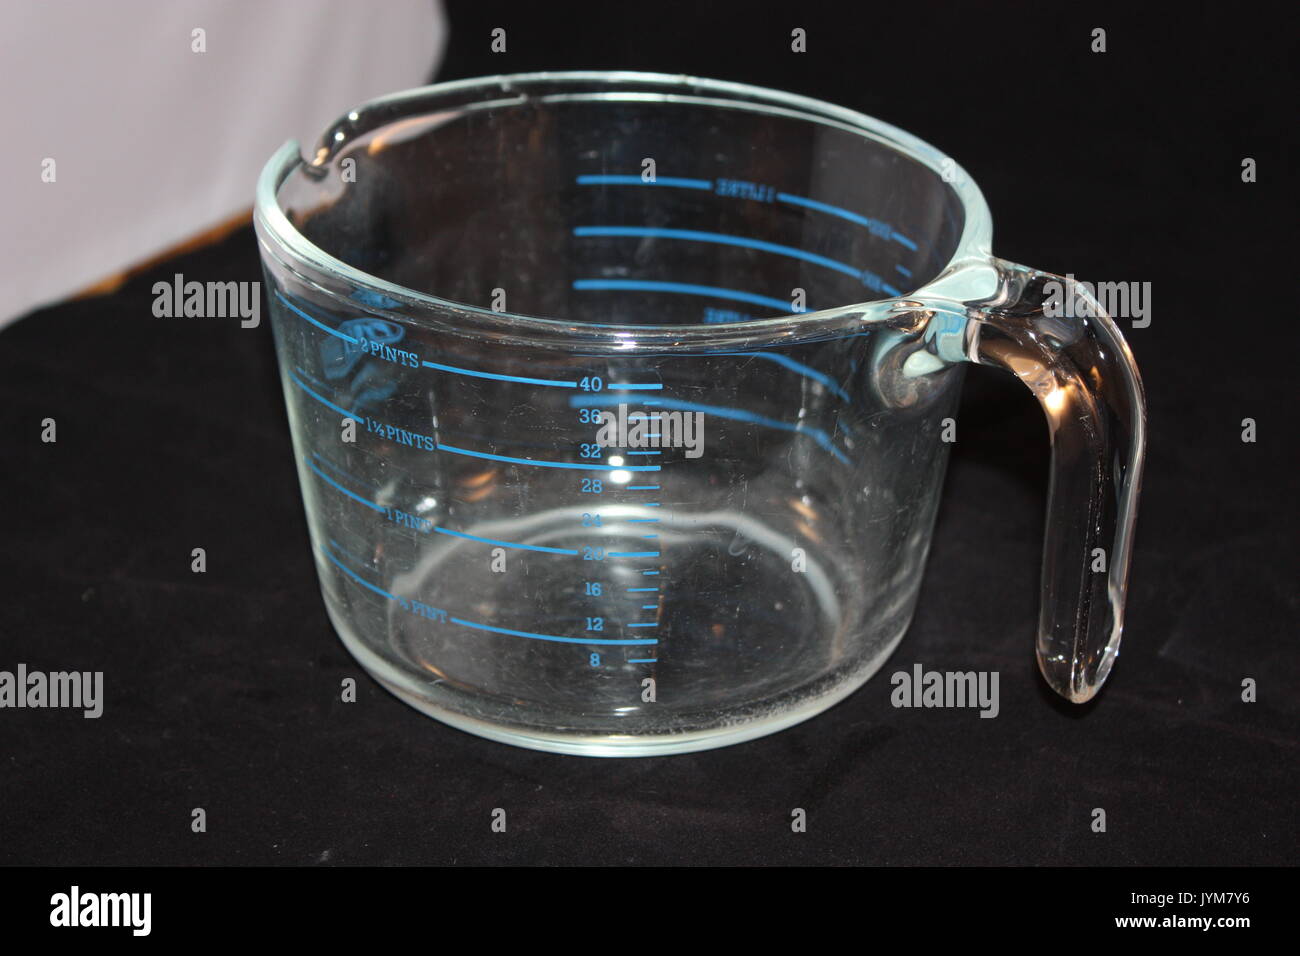 Pyrex Glass Chemistry Measuring Cup 12 Oz Pyrex Glass 